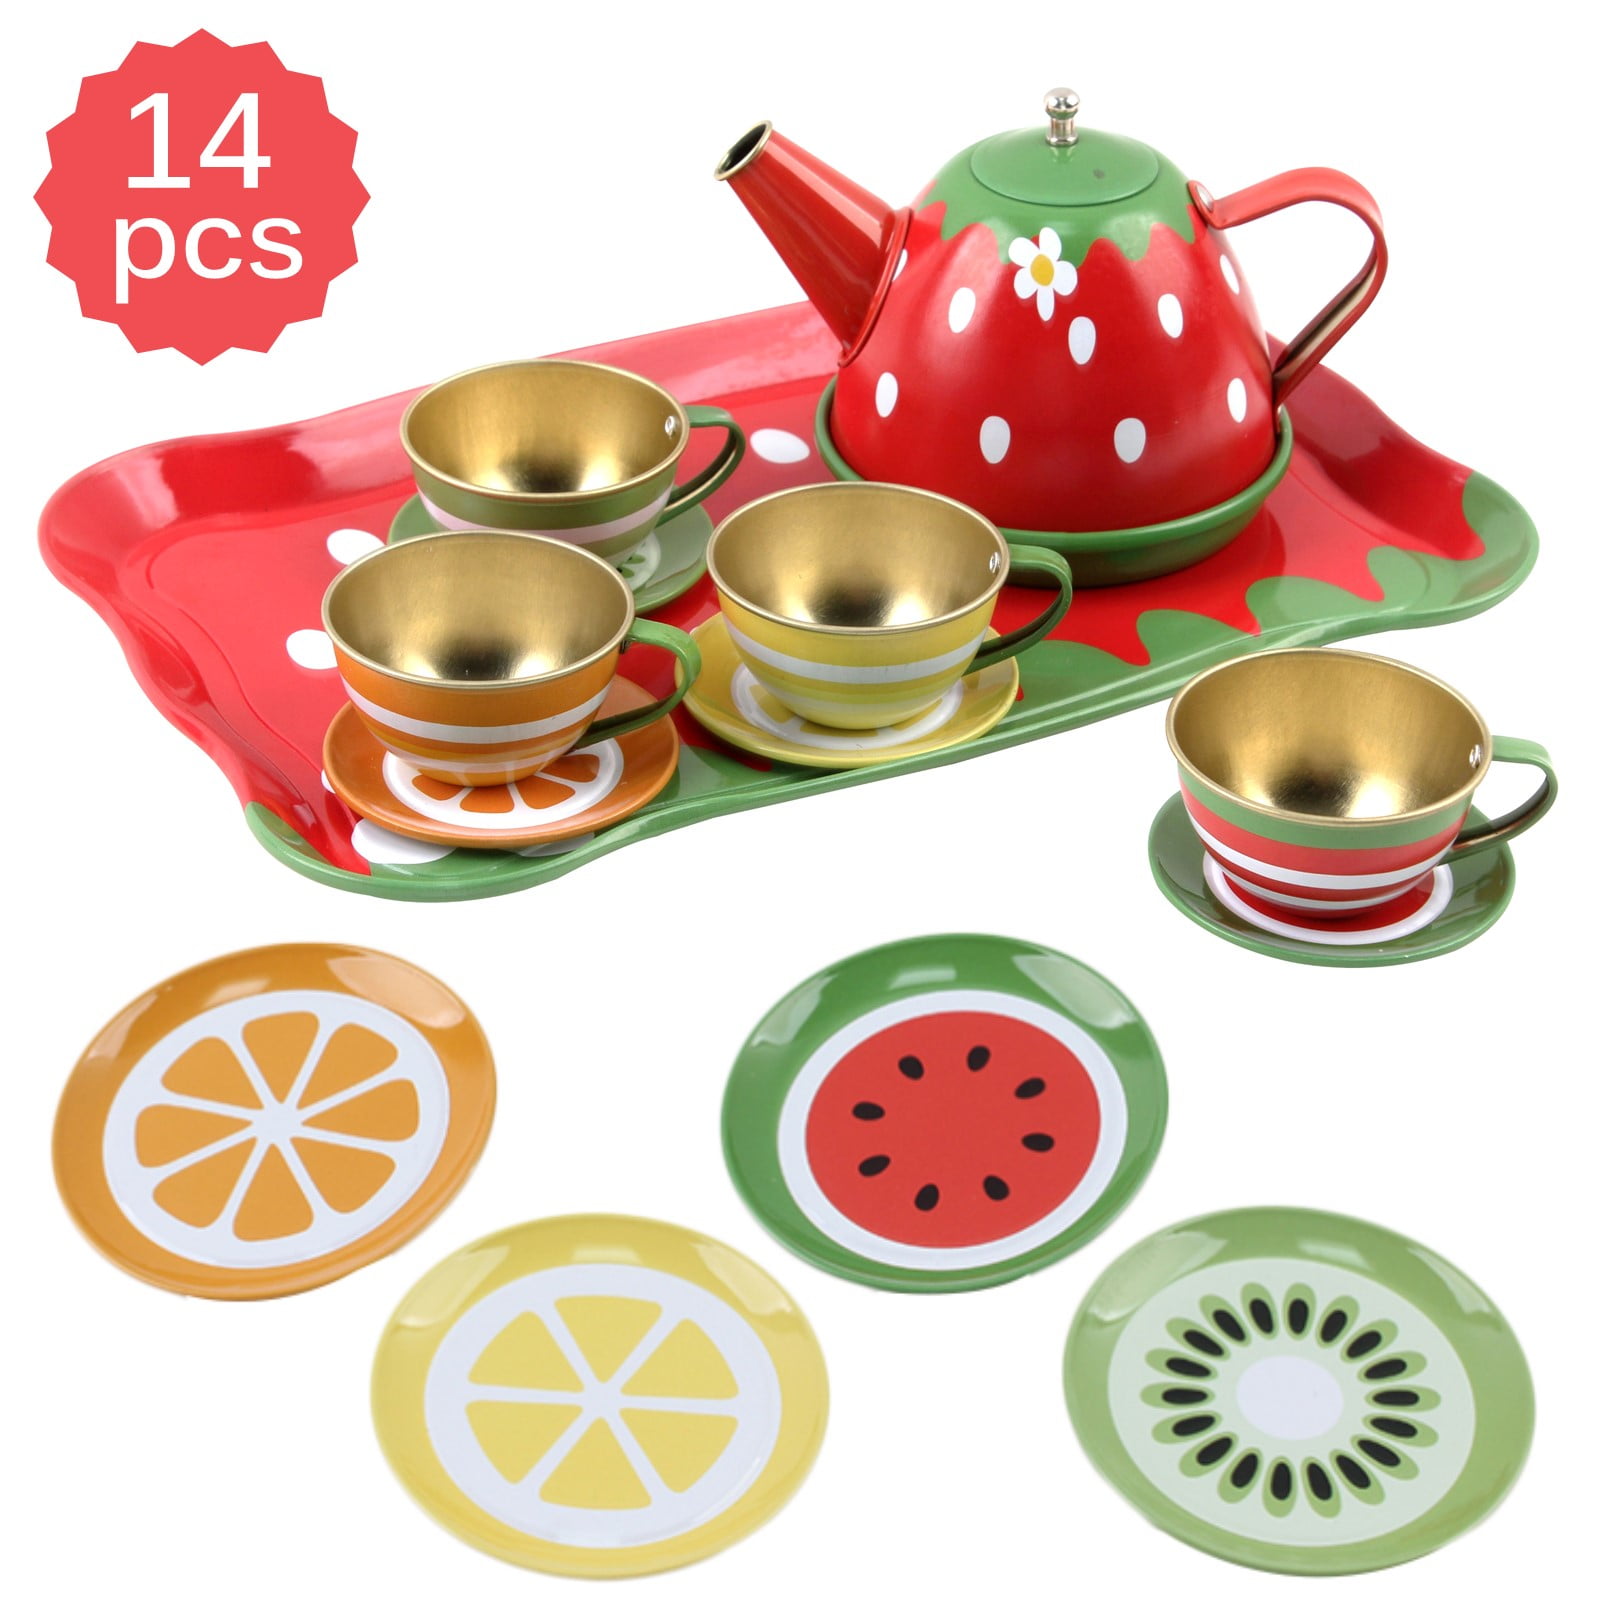 Details about   Toy Tea Set Pretend Role Play Kitchen Teapot Cup Plate Teaset Cakes Dessert 